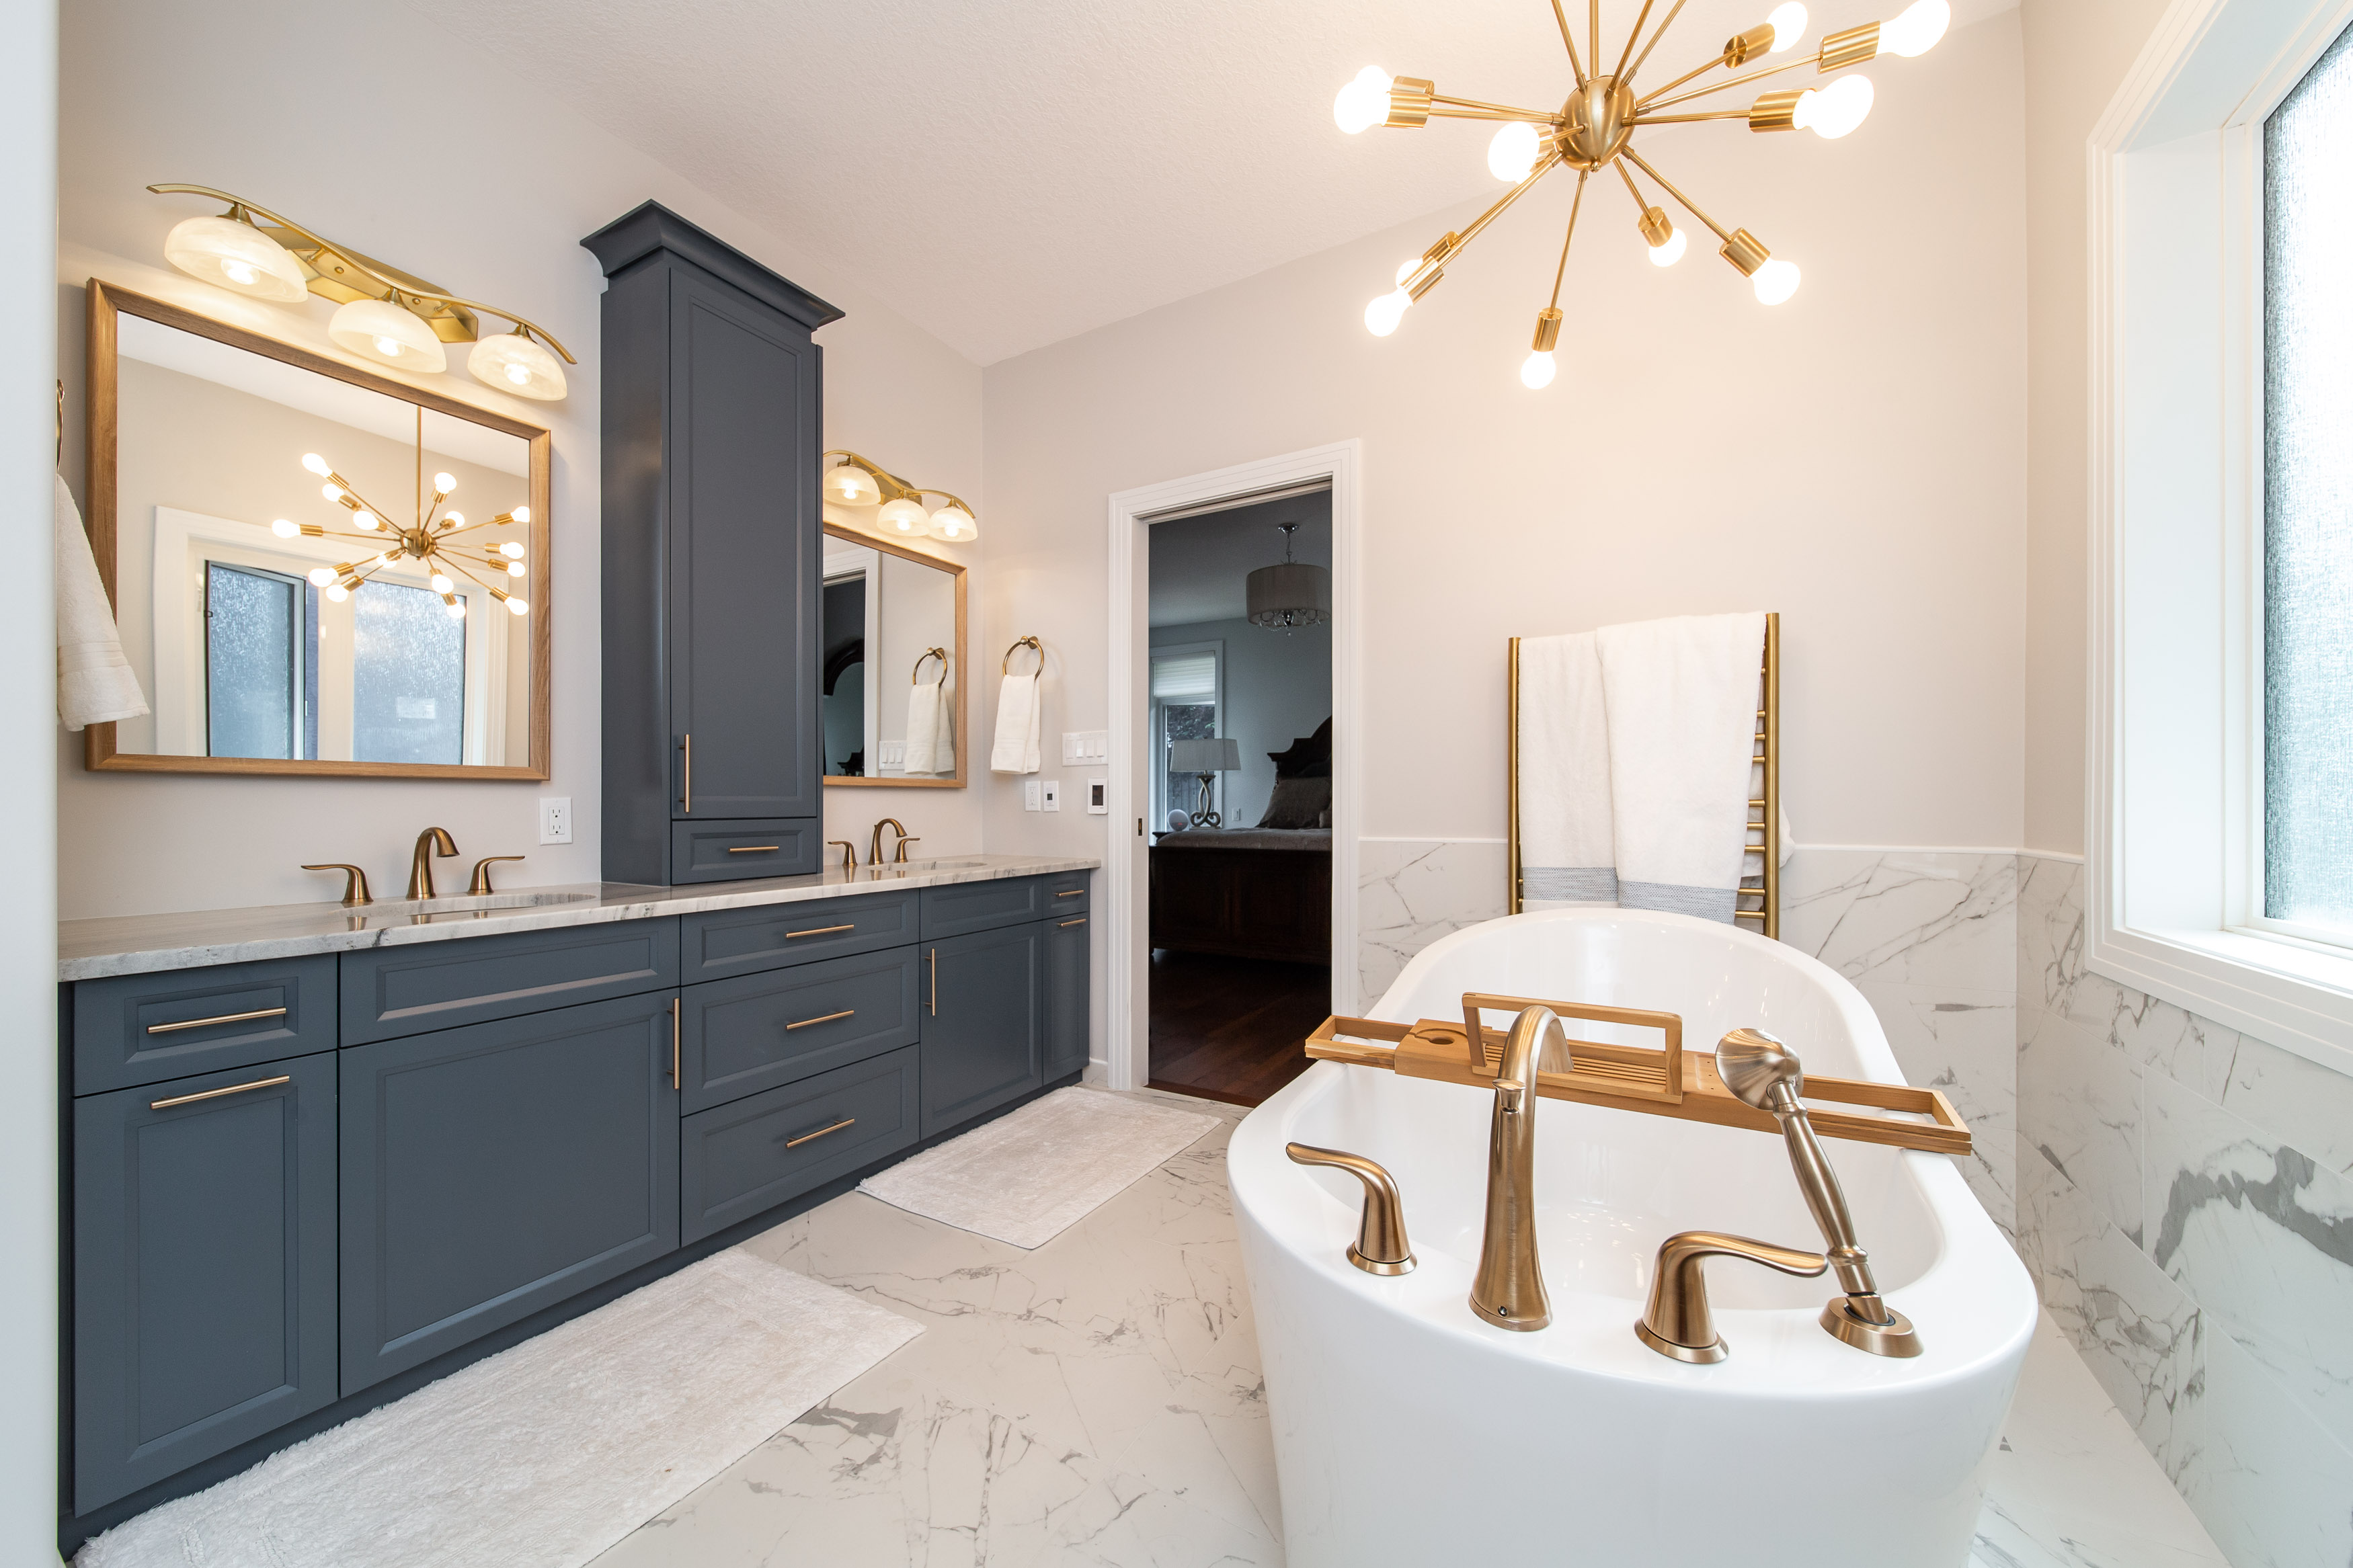 Luxurious En Suite Bathroom Inspiration, Contact Renovations blog